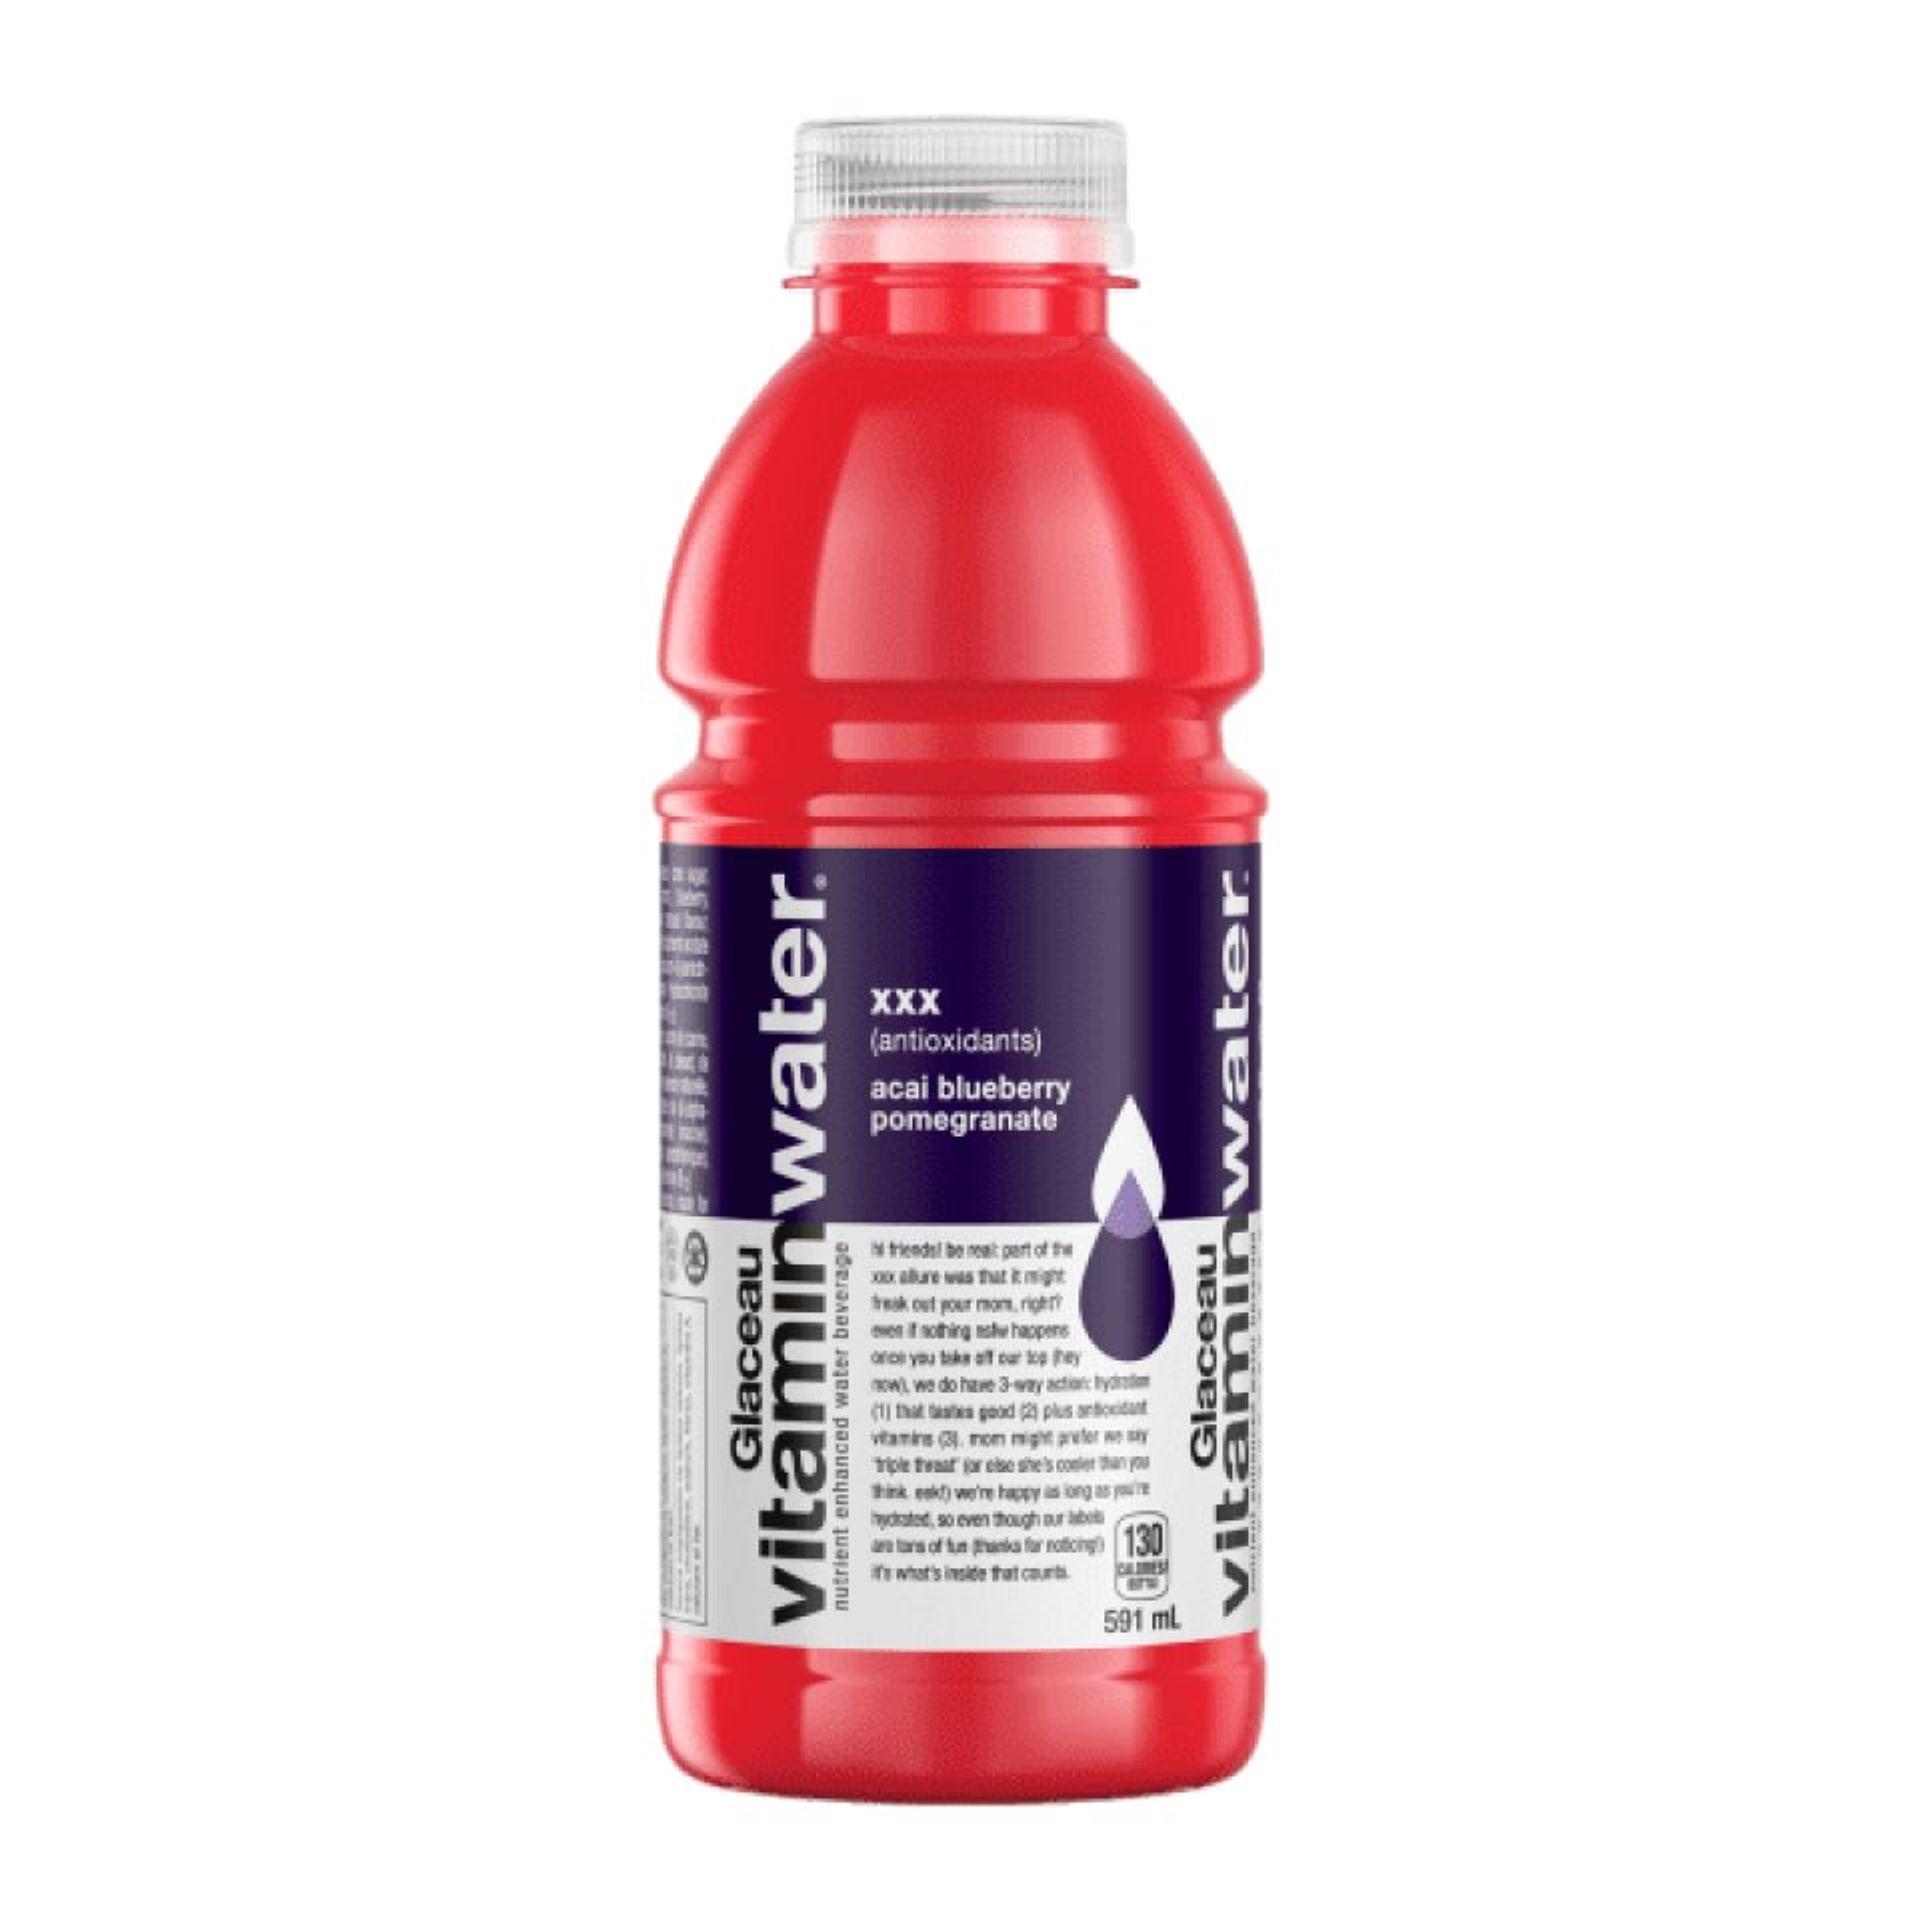 Açai Blueberry Pomegranate Vitamin Water